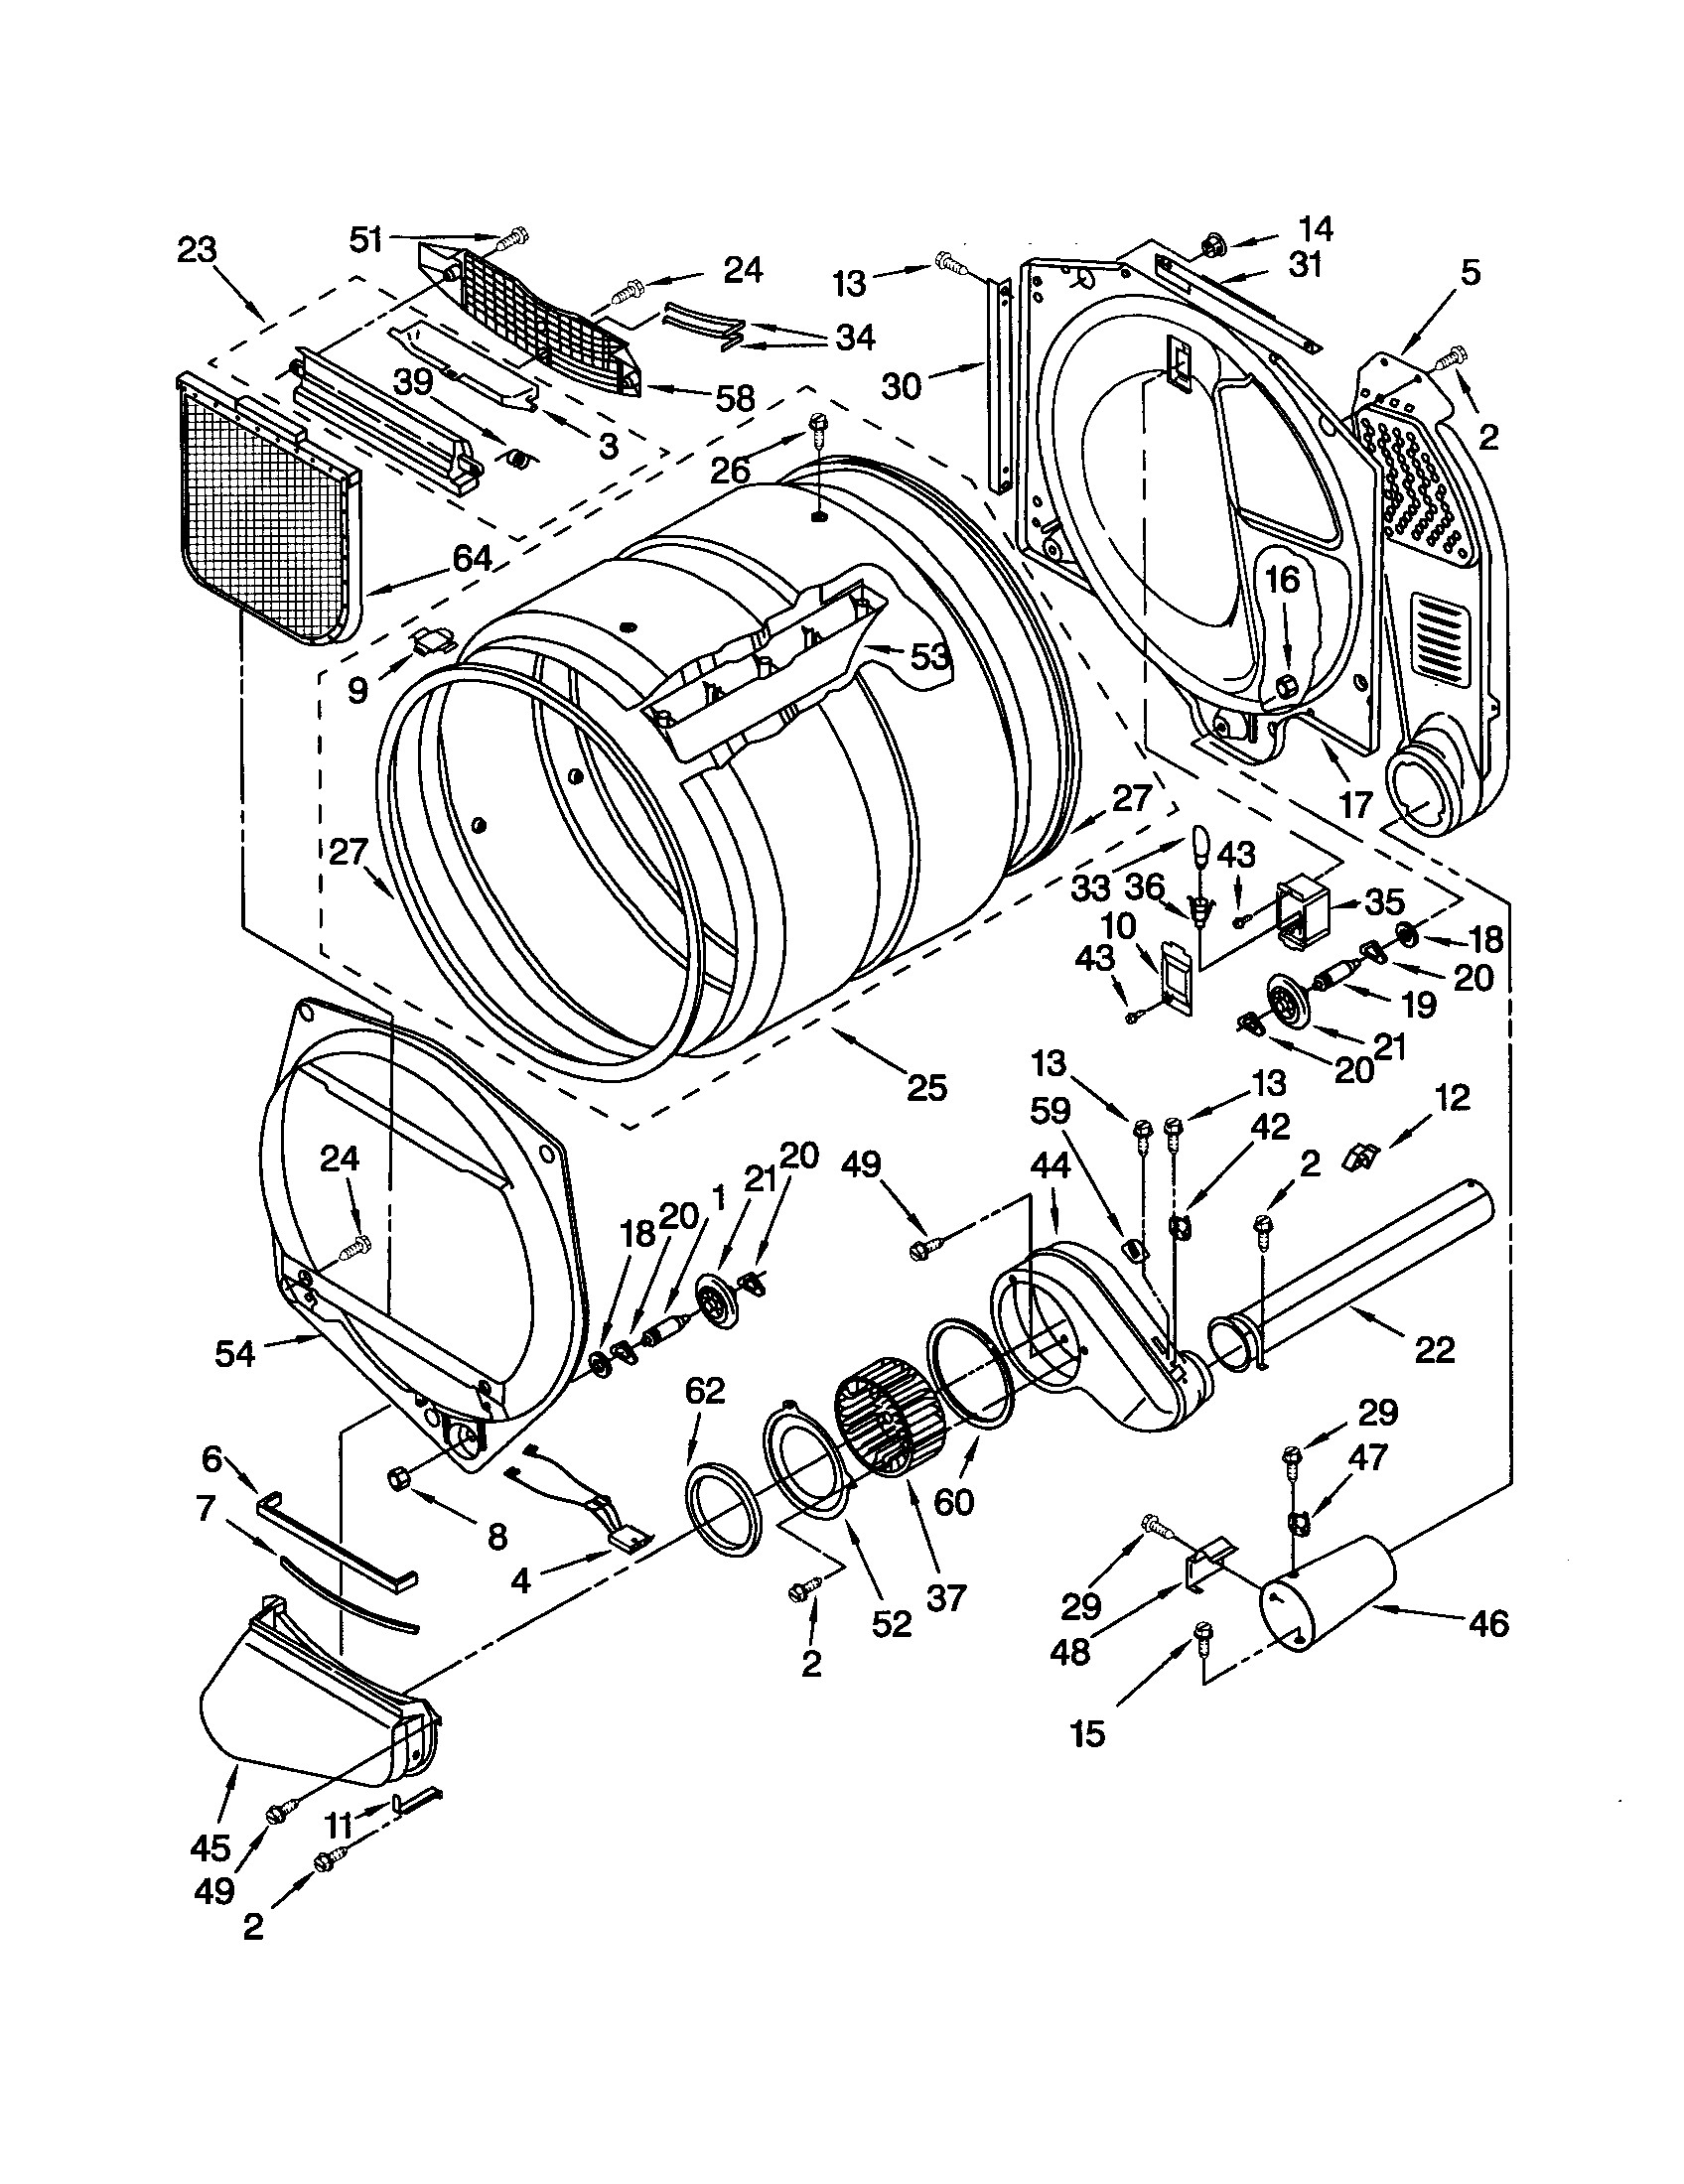 Samsung Dryer Wiring Diagram Ts 5995] Wiring Diagram Appliance Dryer Of Samsung Dryer Wiring Diagram